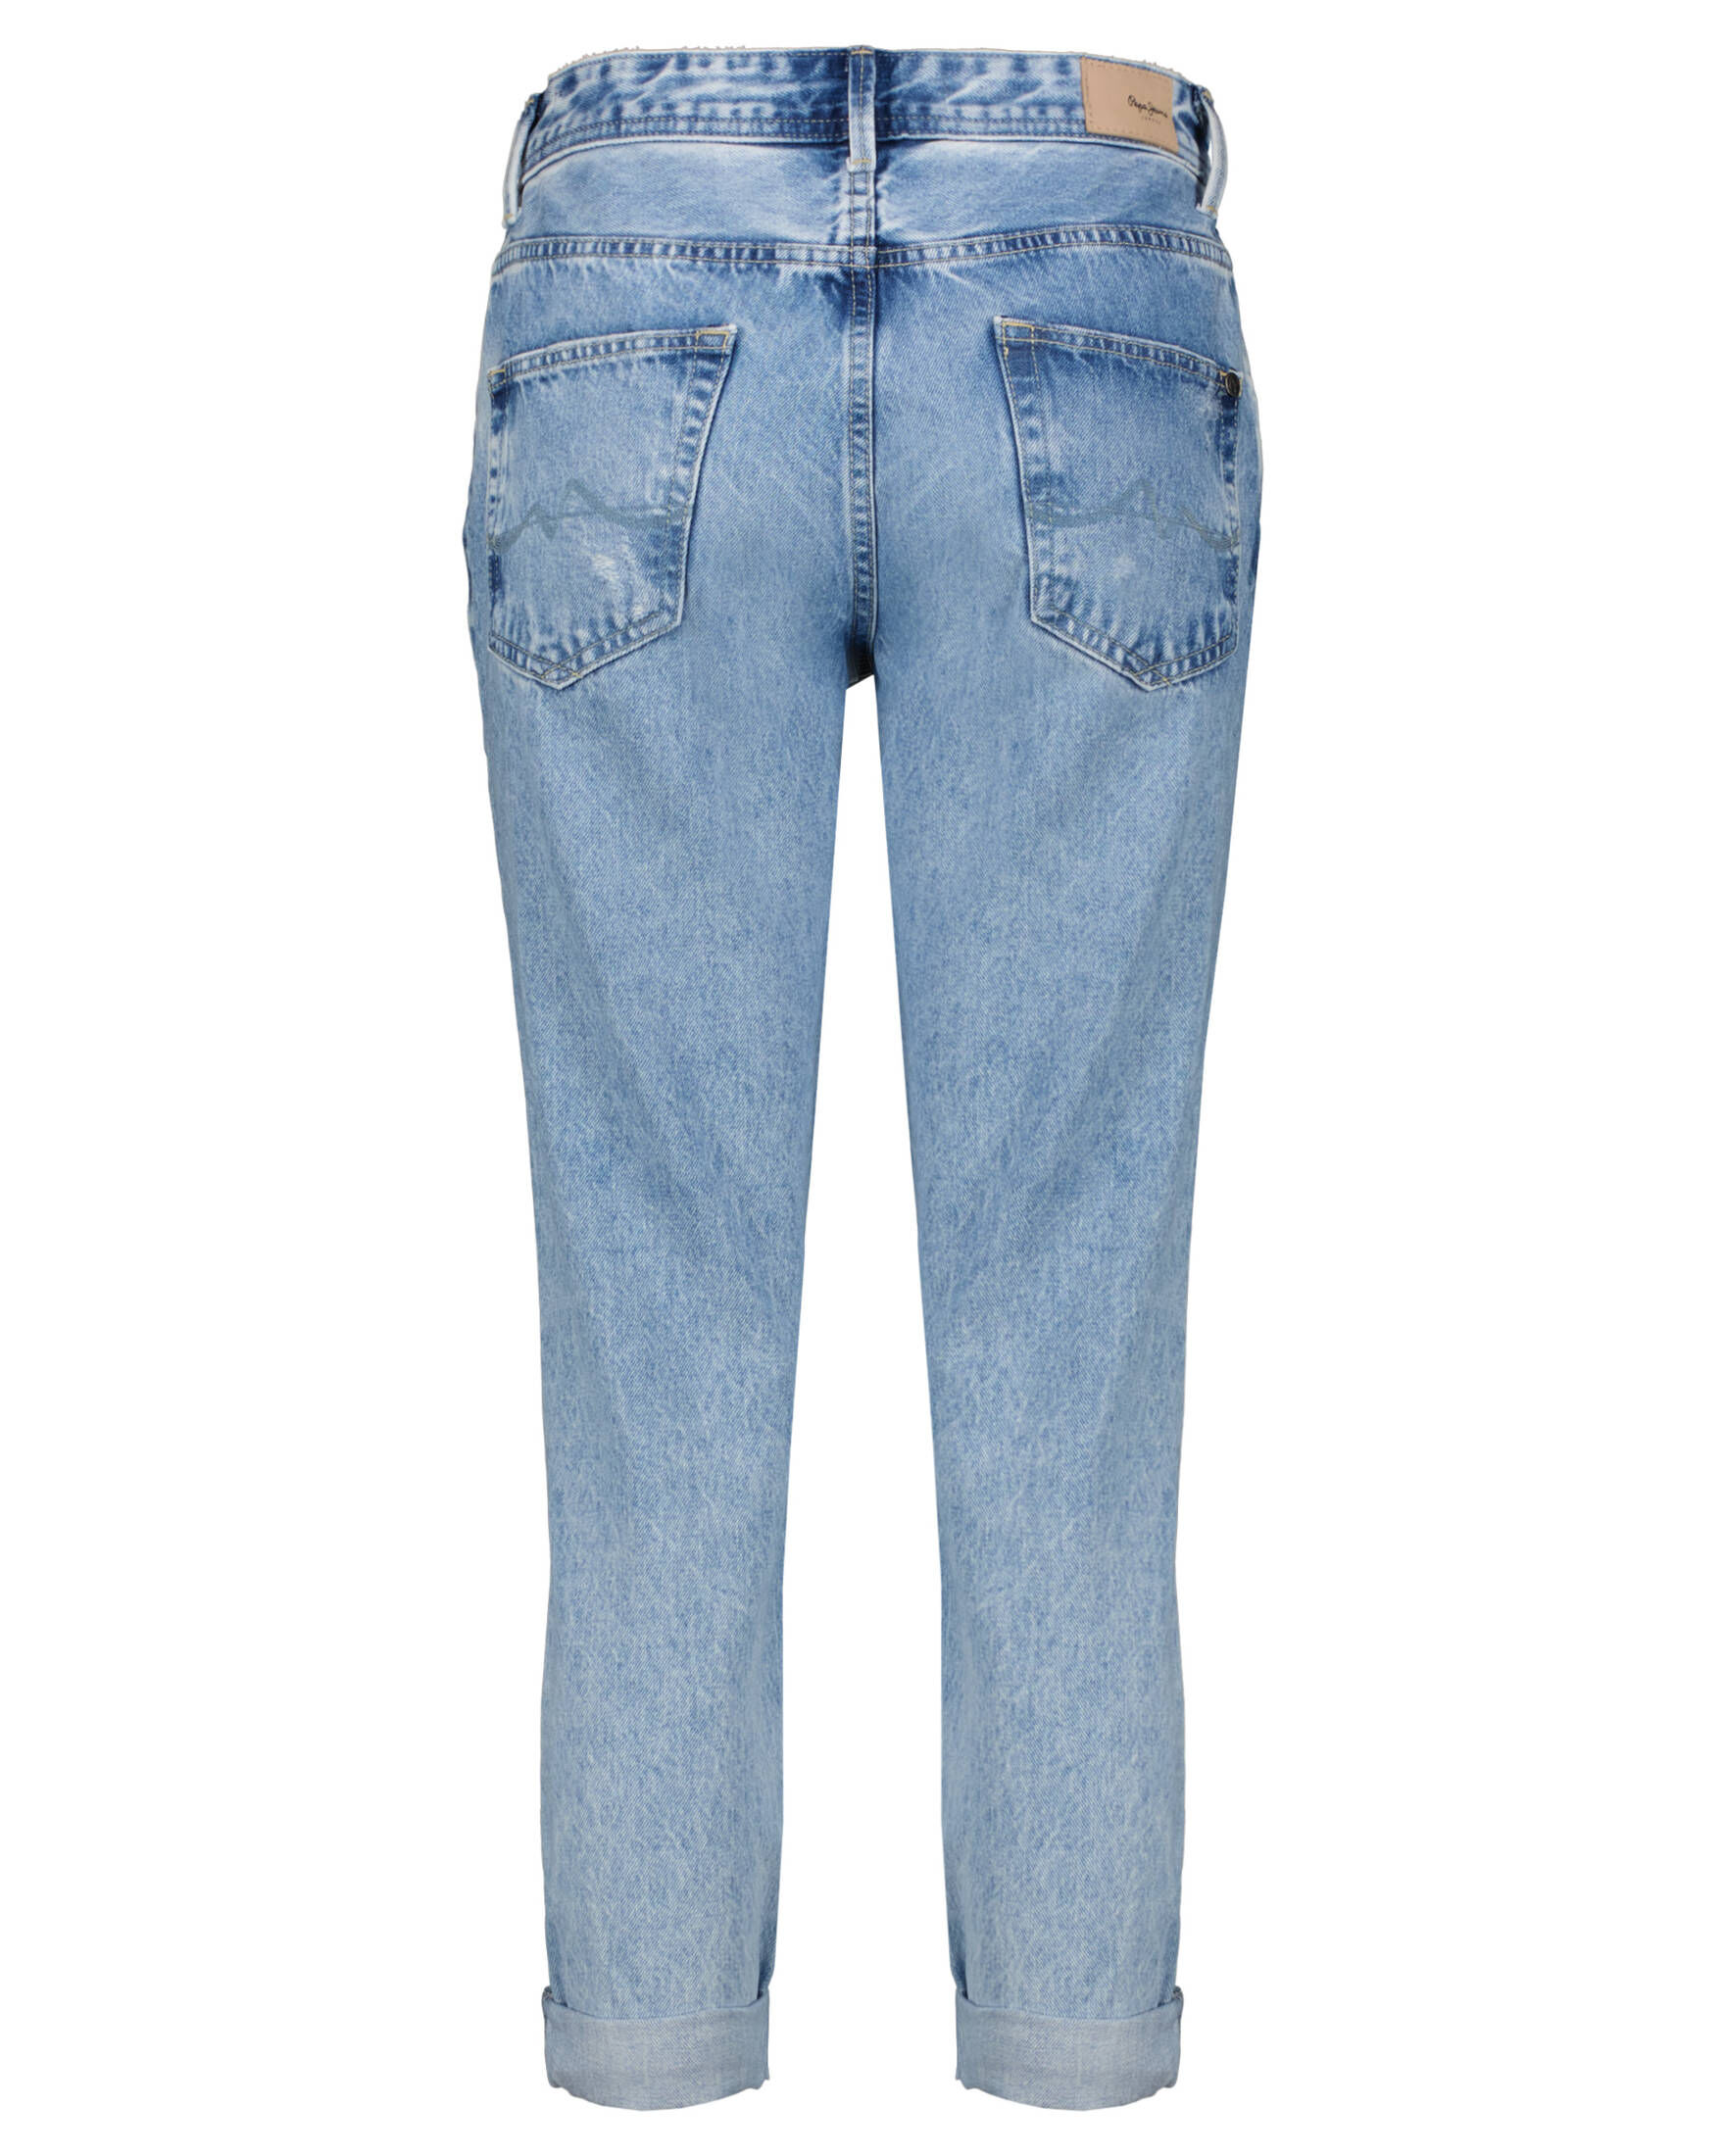 Pepe Jeans Damen Jeans VIOLET Straight Fit kaufen | engelhorn